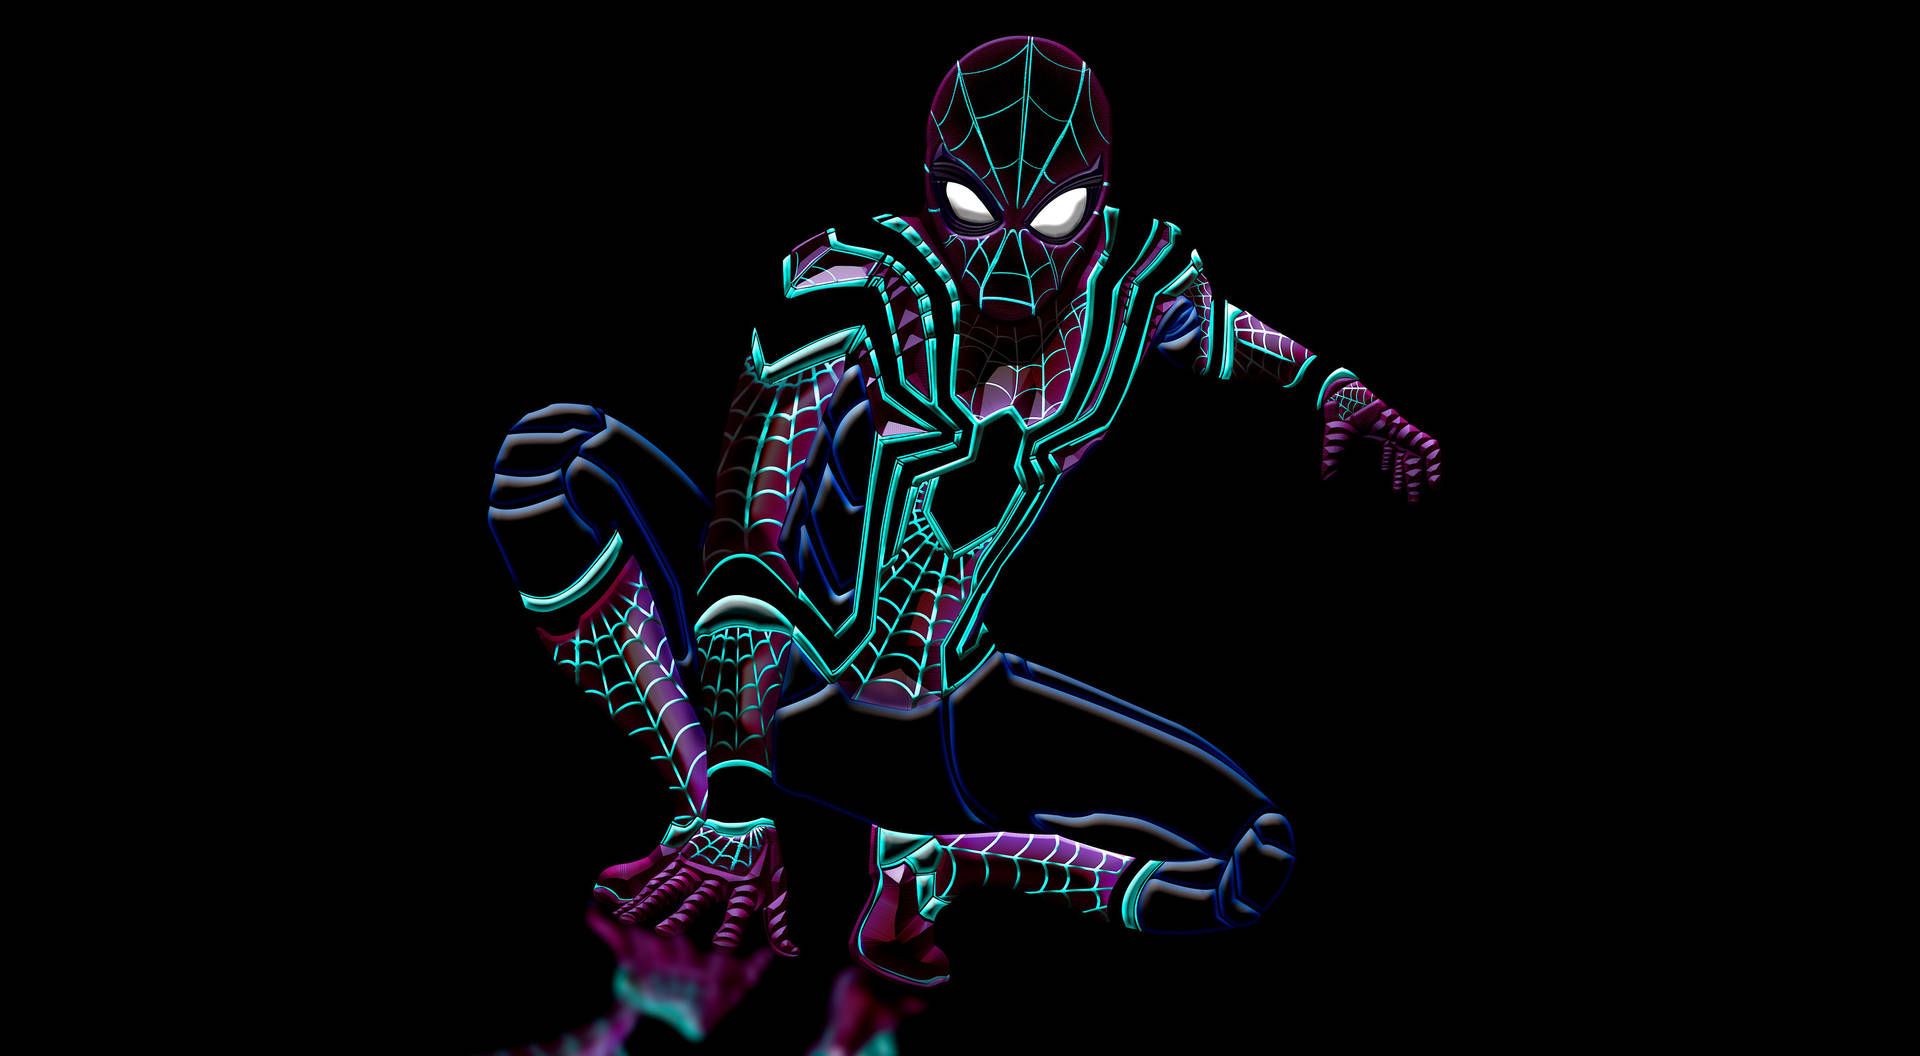 Neon Spiderman - A Vibrant Interpretation In Black Art